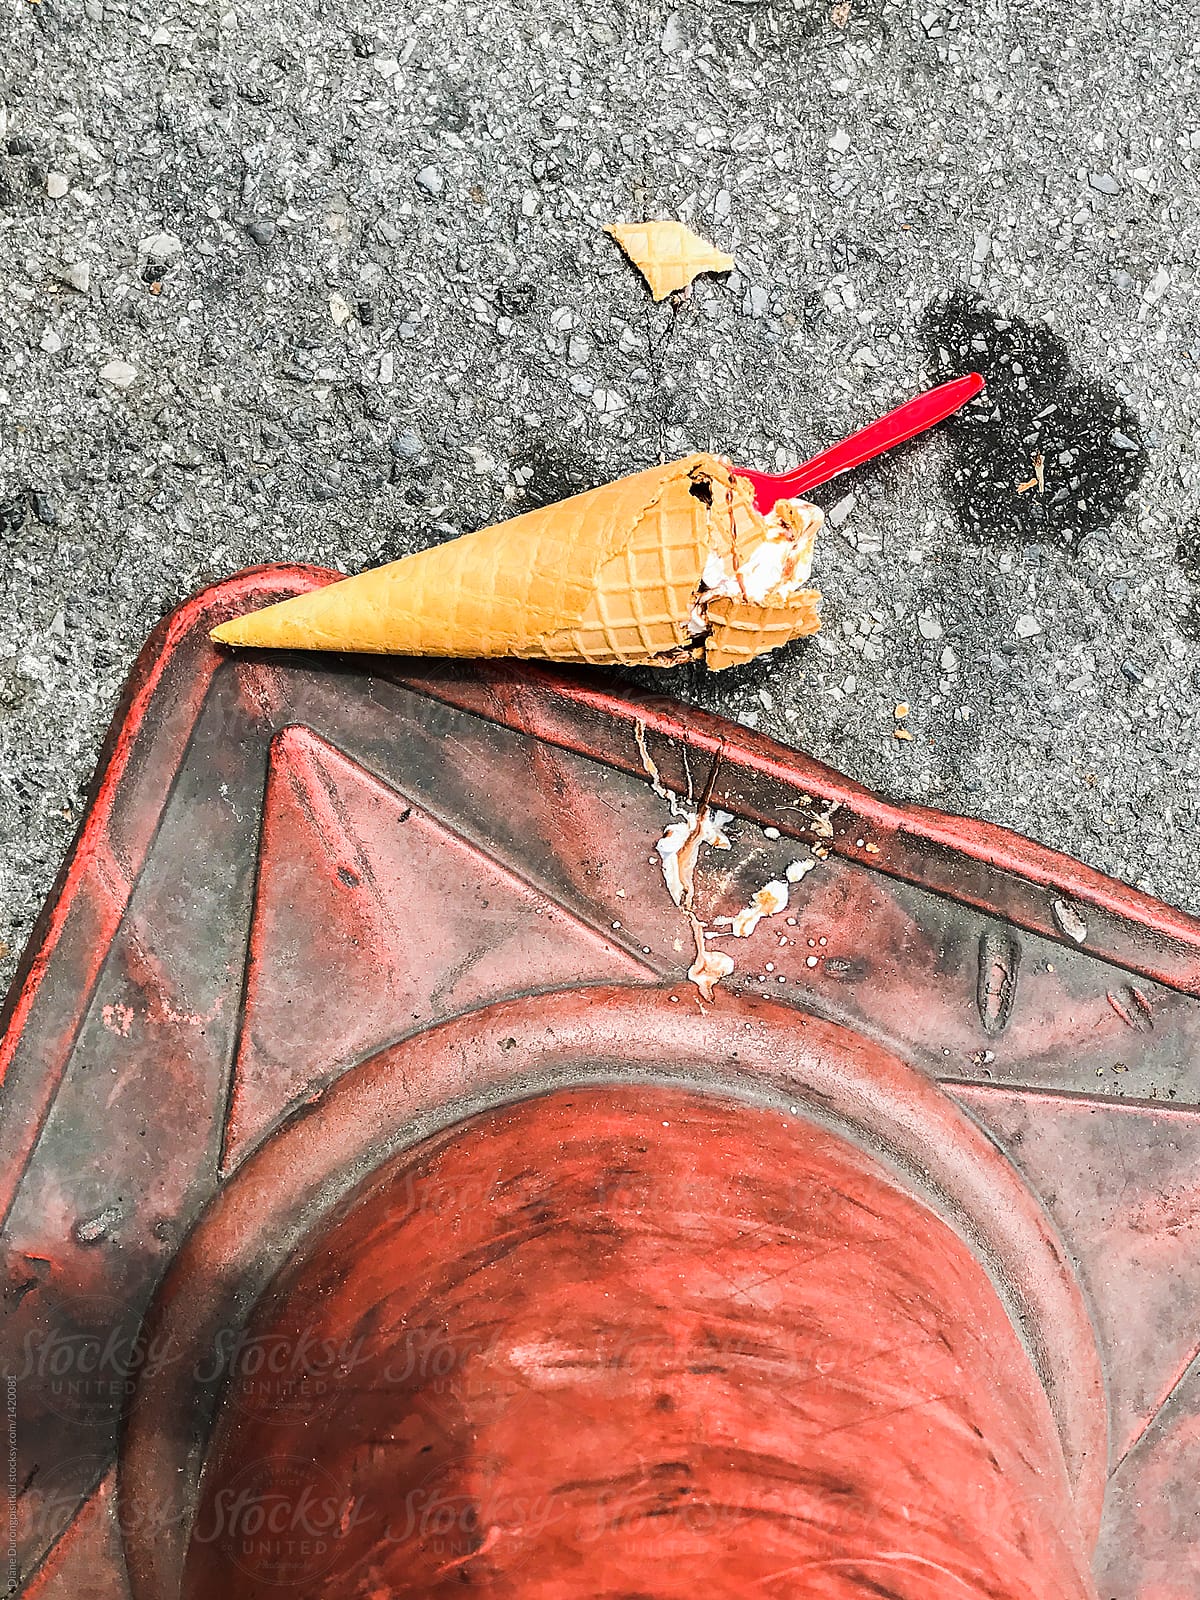 I dropped my Ice Cream